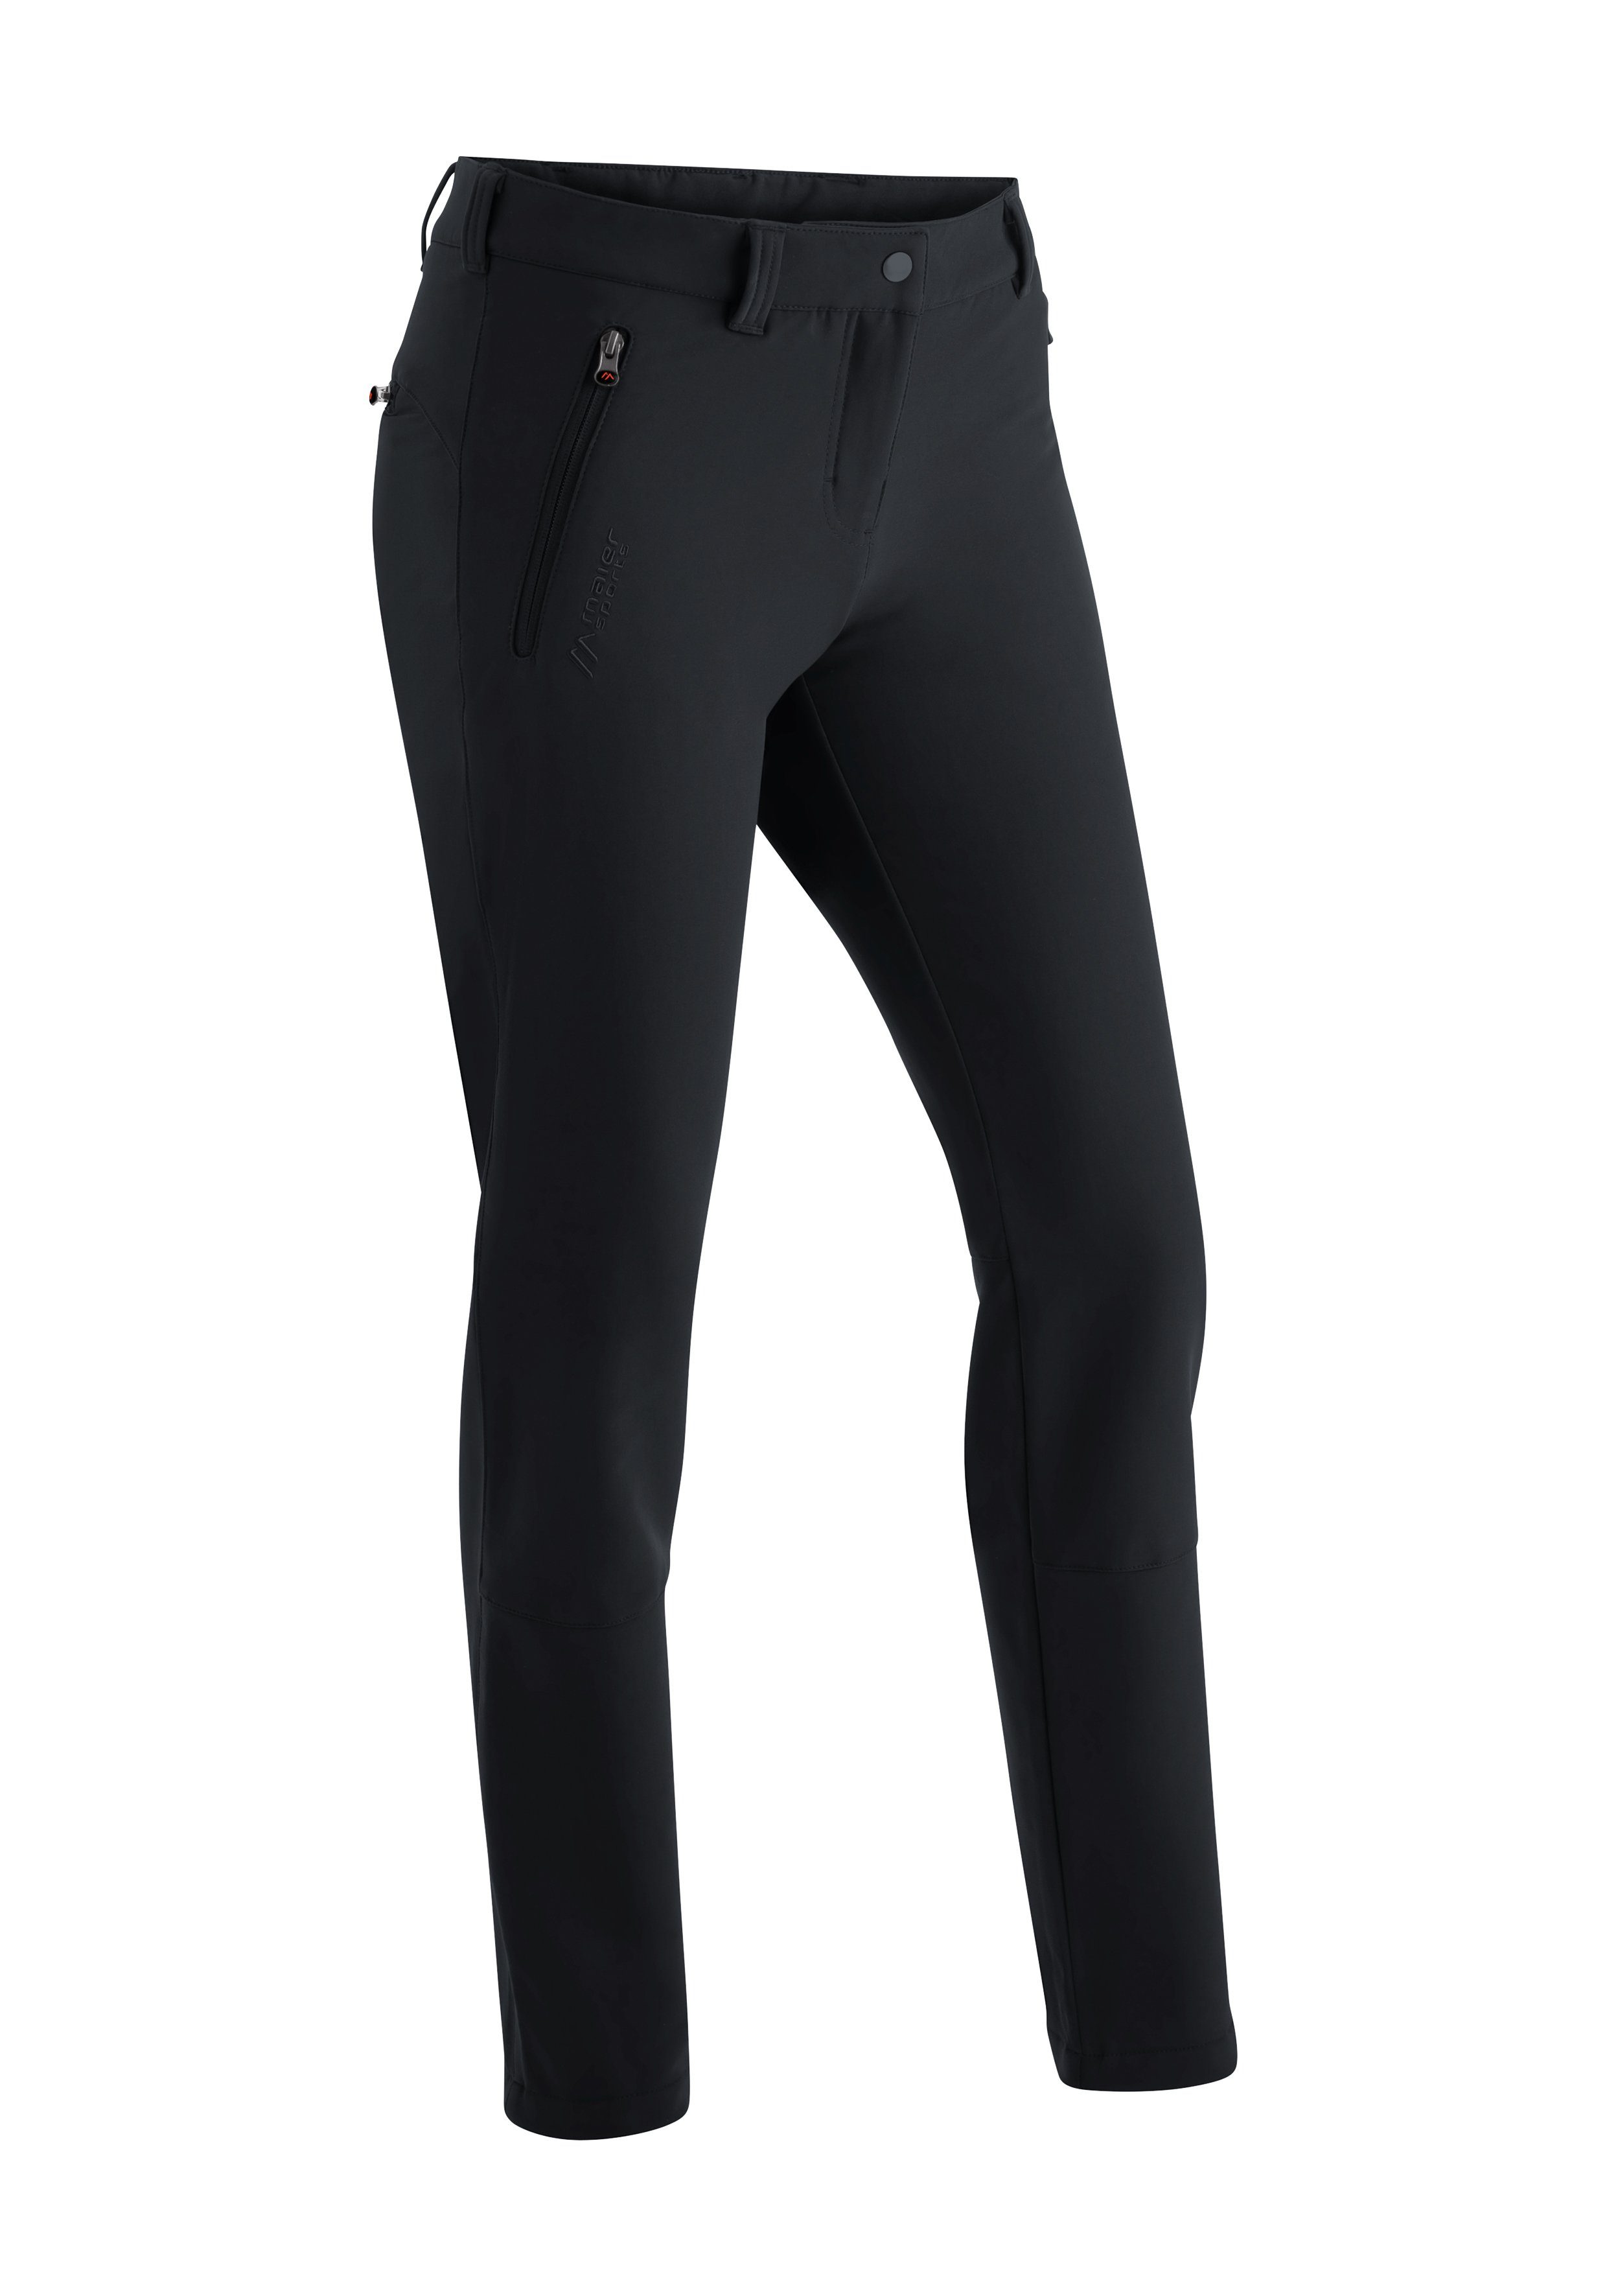 Maier Sports Funktionshose Helga slim Slim fit, Winter-Outdoorhose, sehr elastisch schwarz